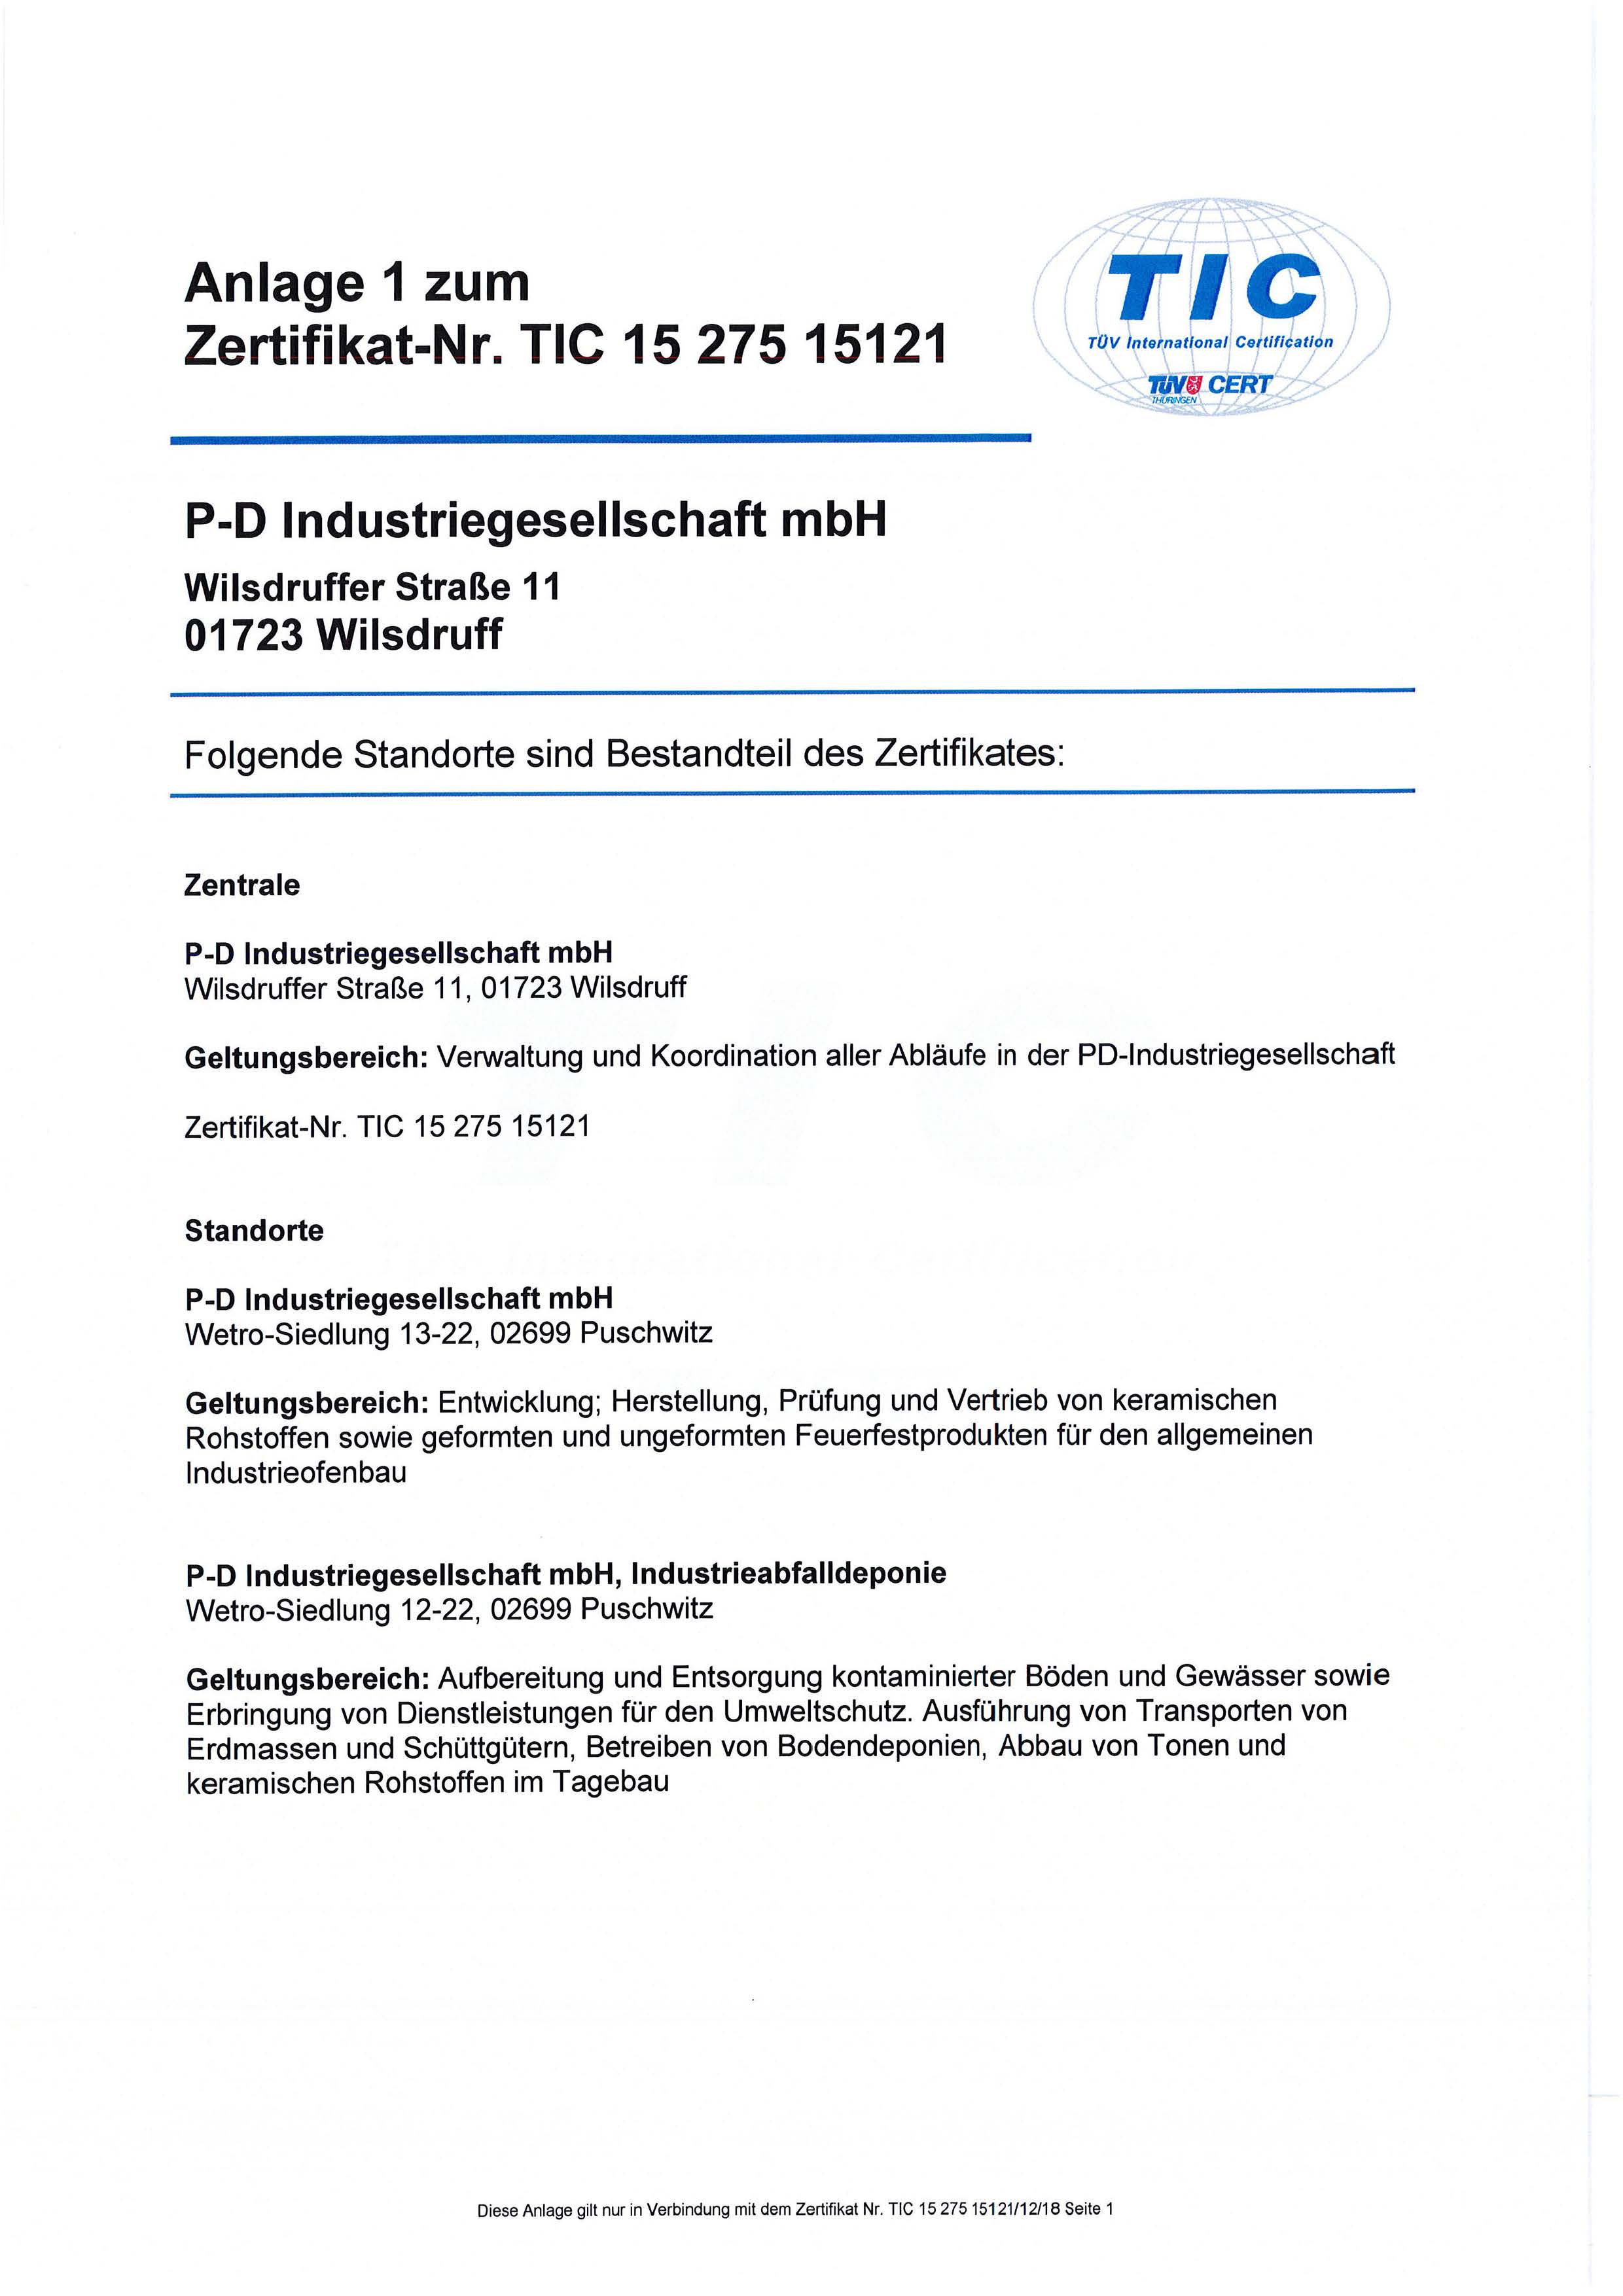 P-D Industriegesellschaft mbH · DIN EN ISO 50001:2018 (příloha)